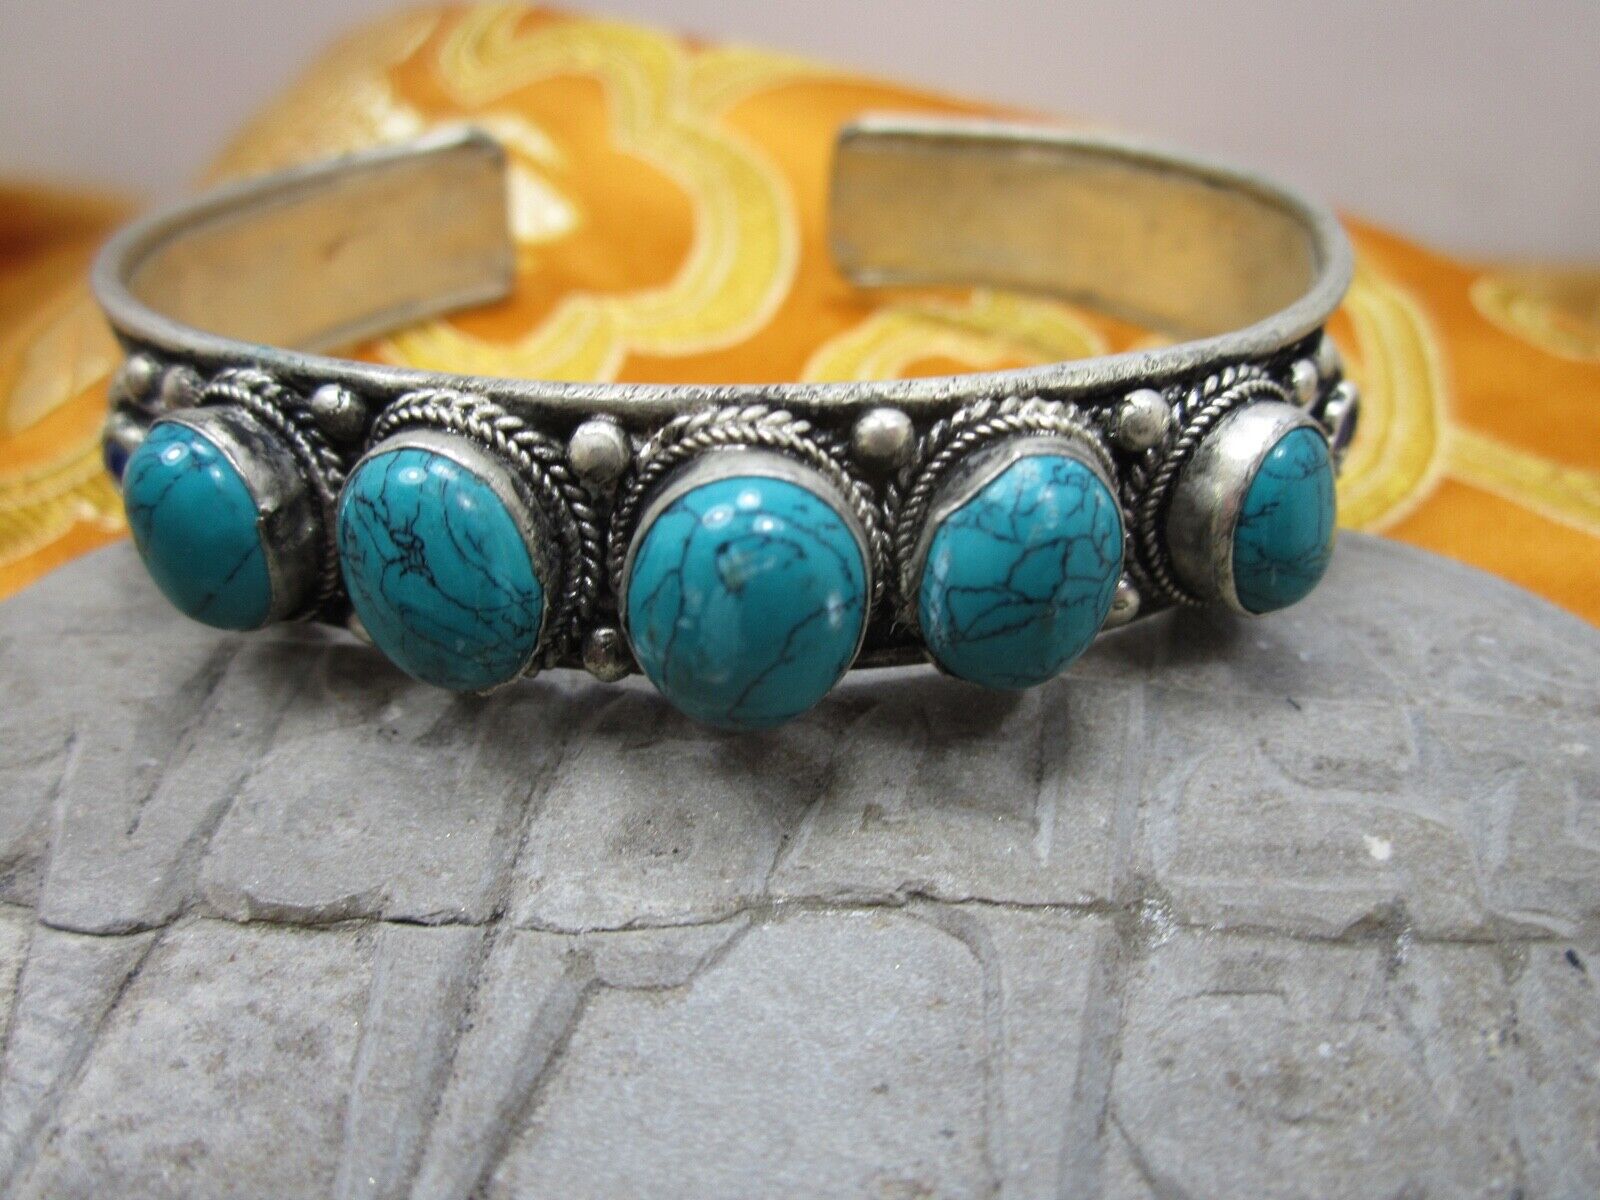 USA Seller Unisex Colorful Faux Turquoise Tibetan Silver Cuff Bracelet Nepal